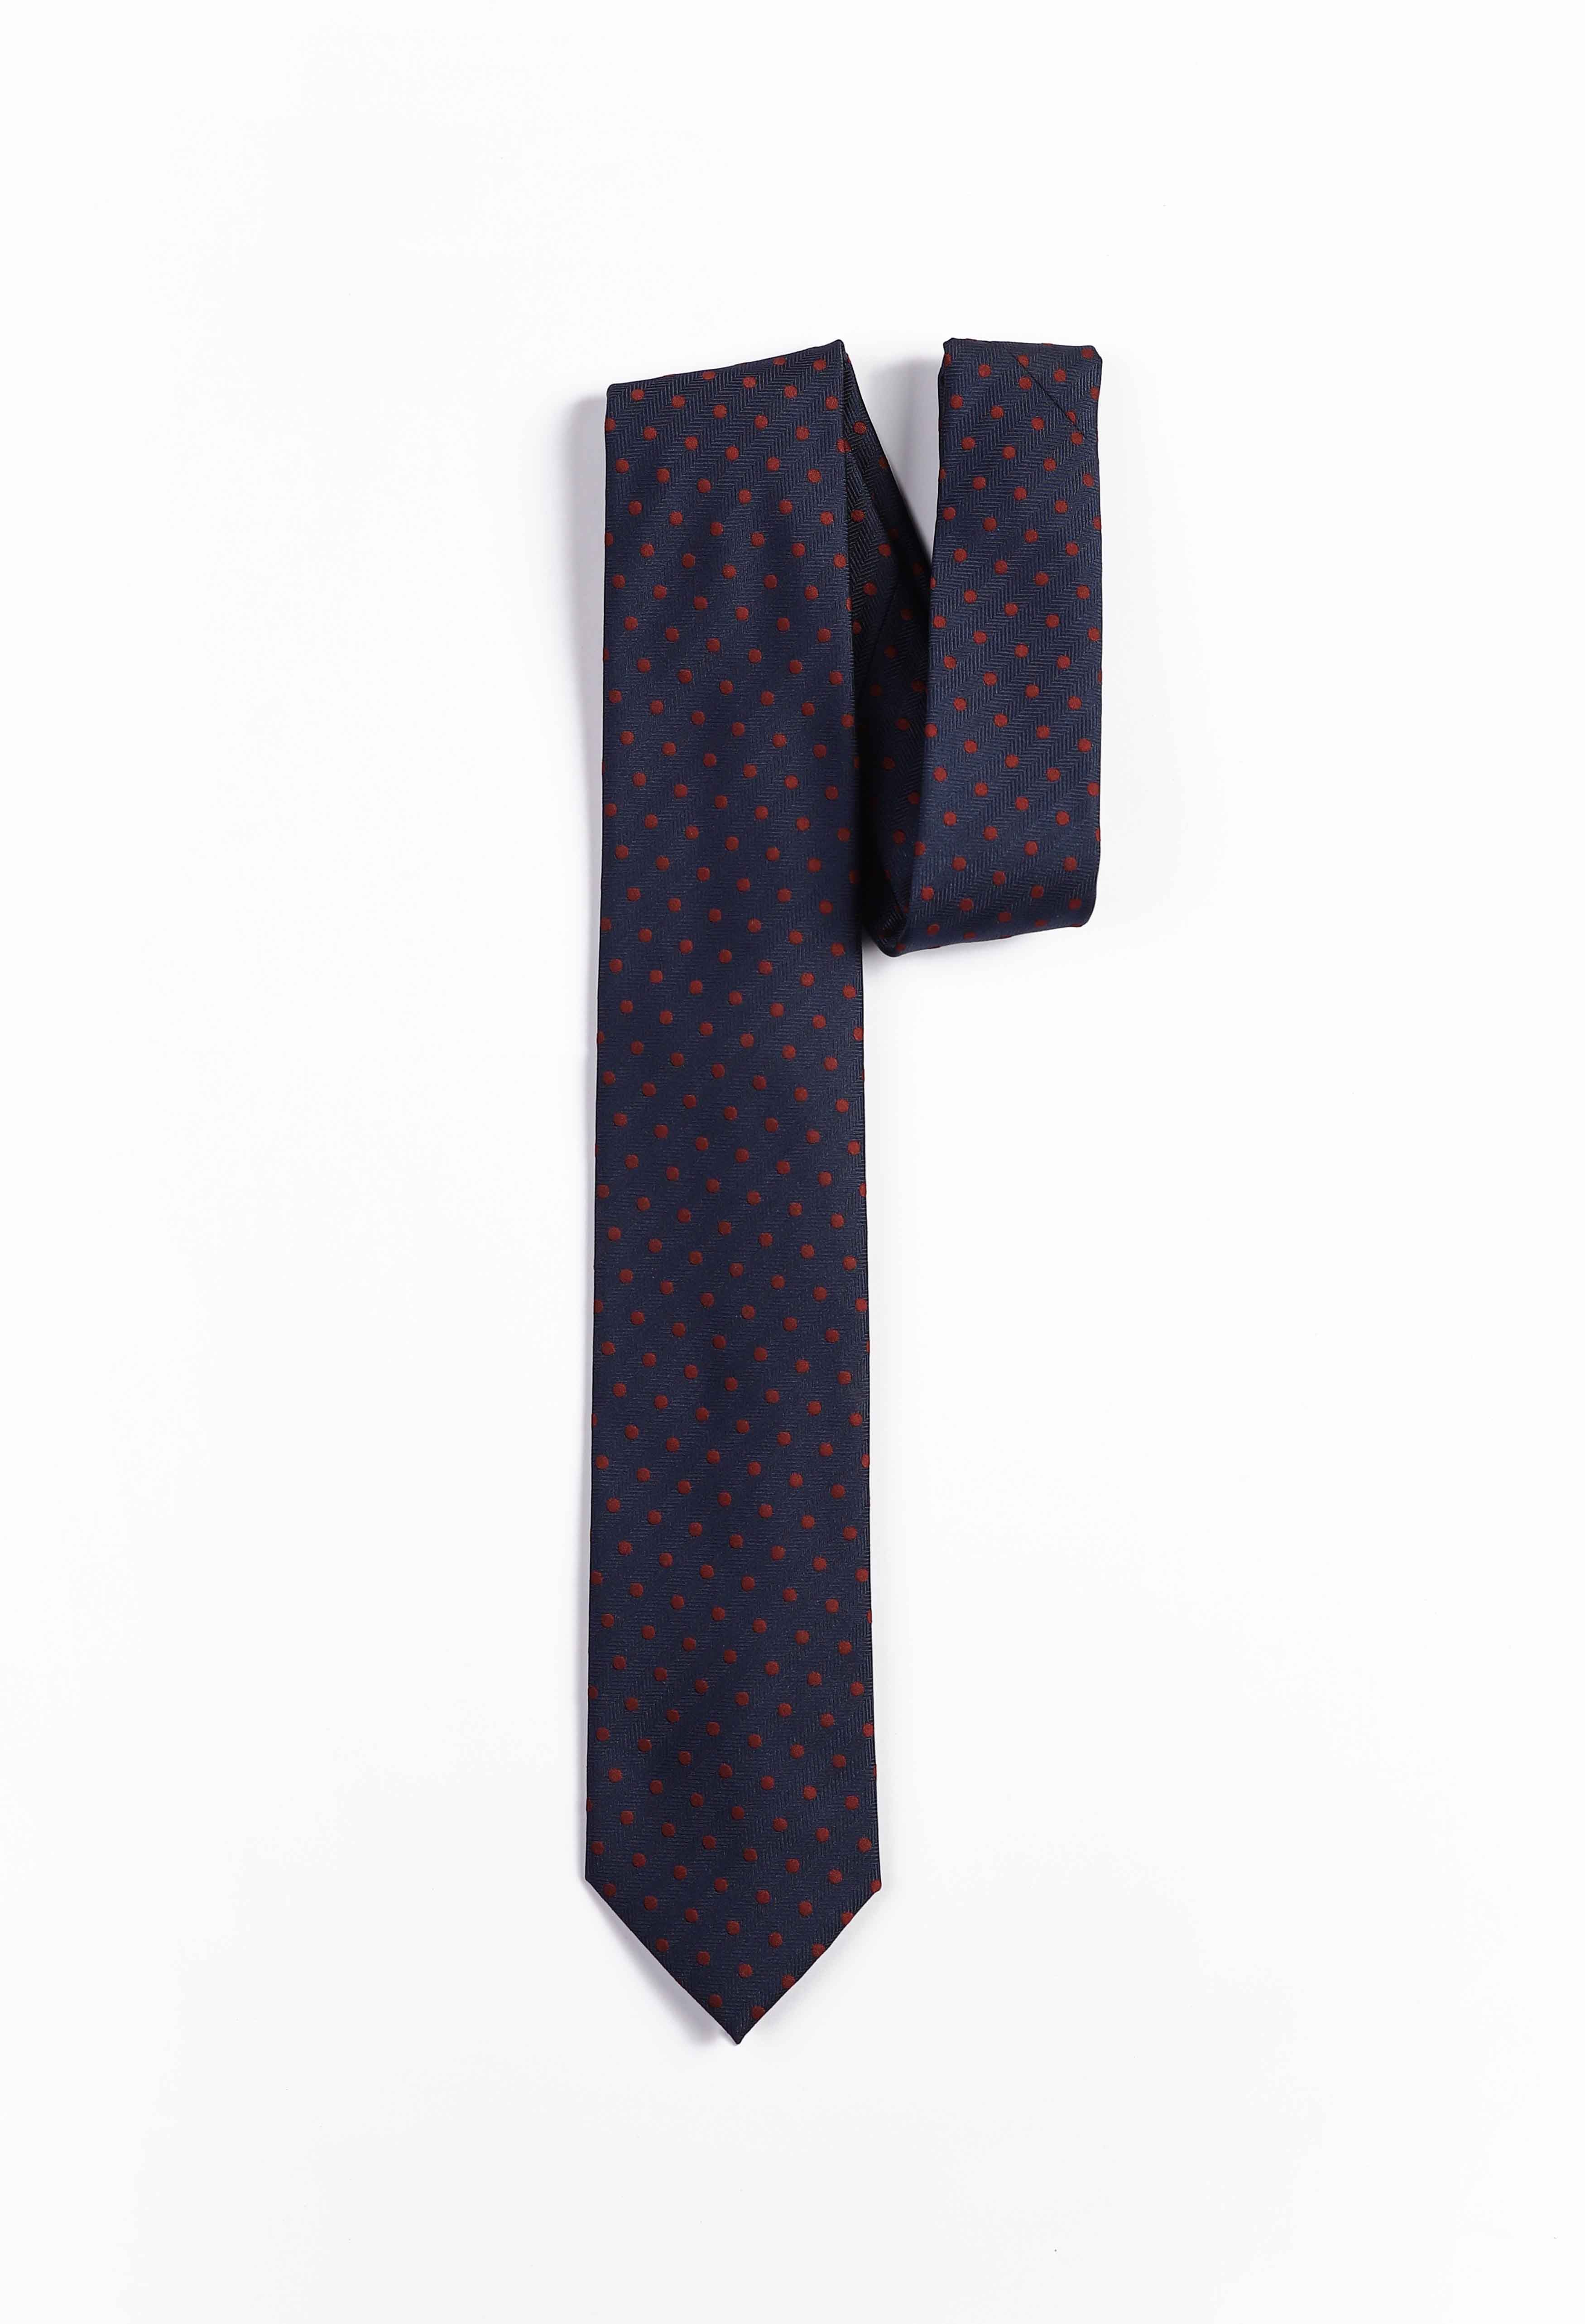 England Blue Doted Tie (TIE-000026)